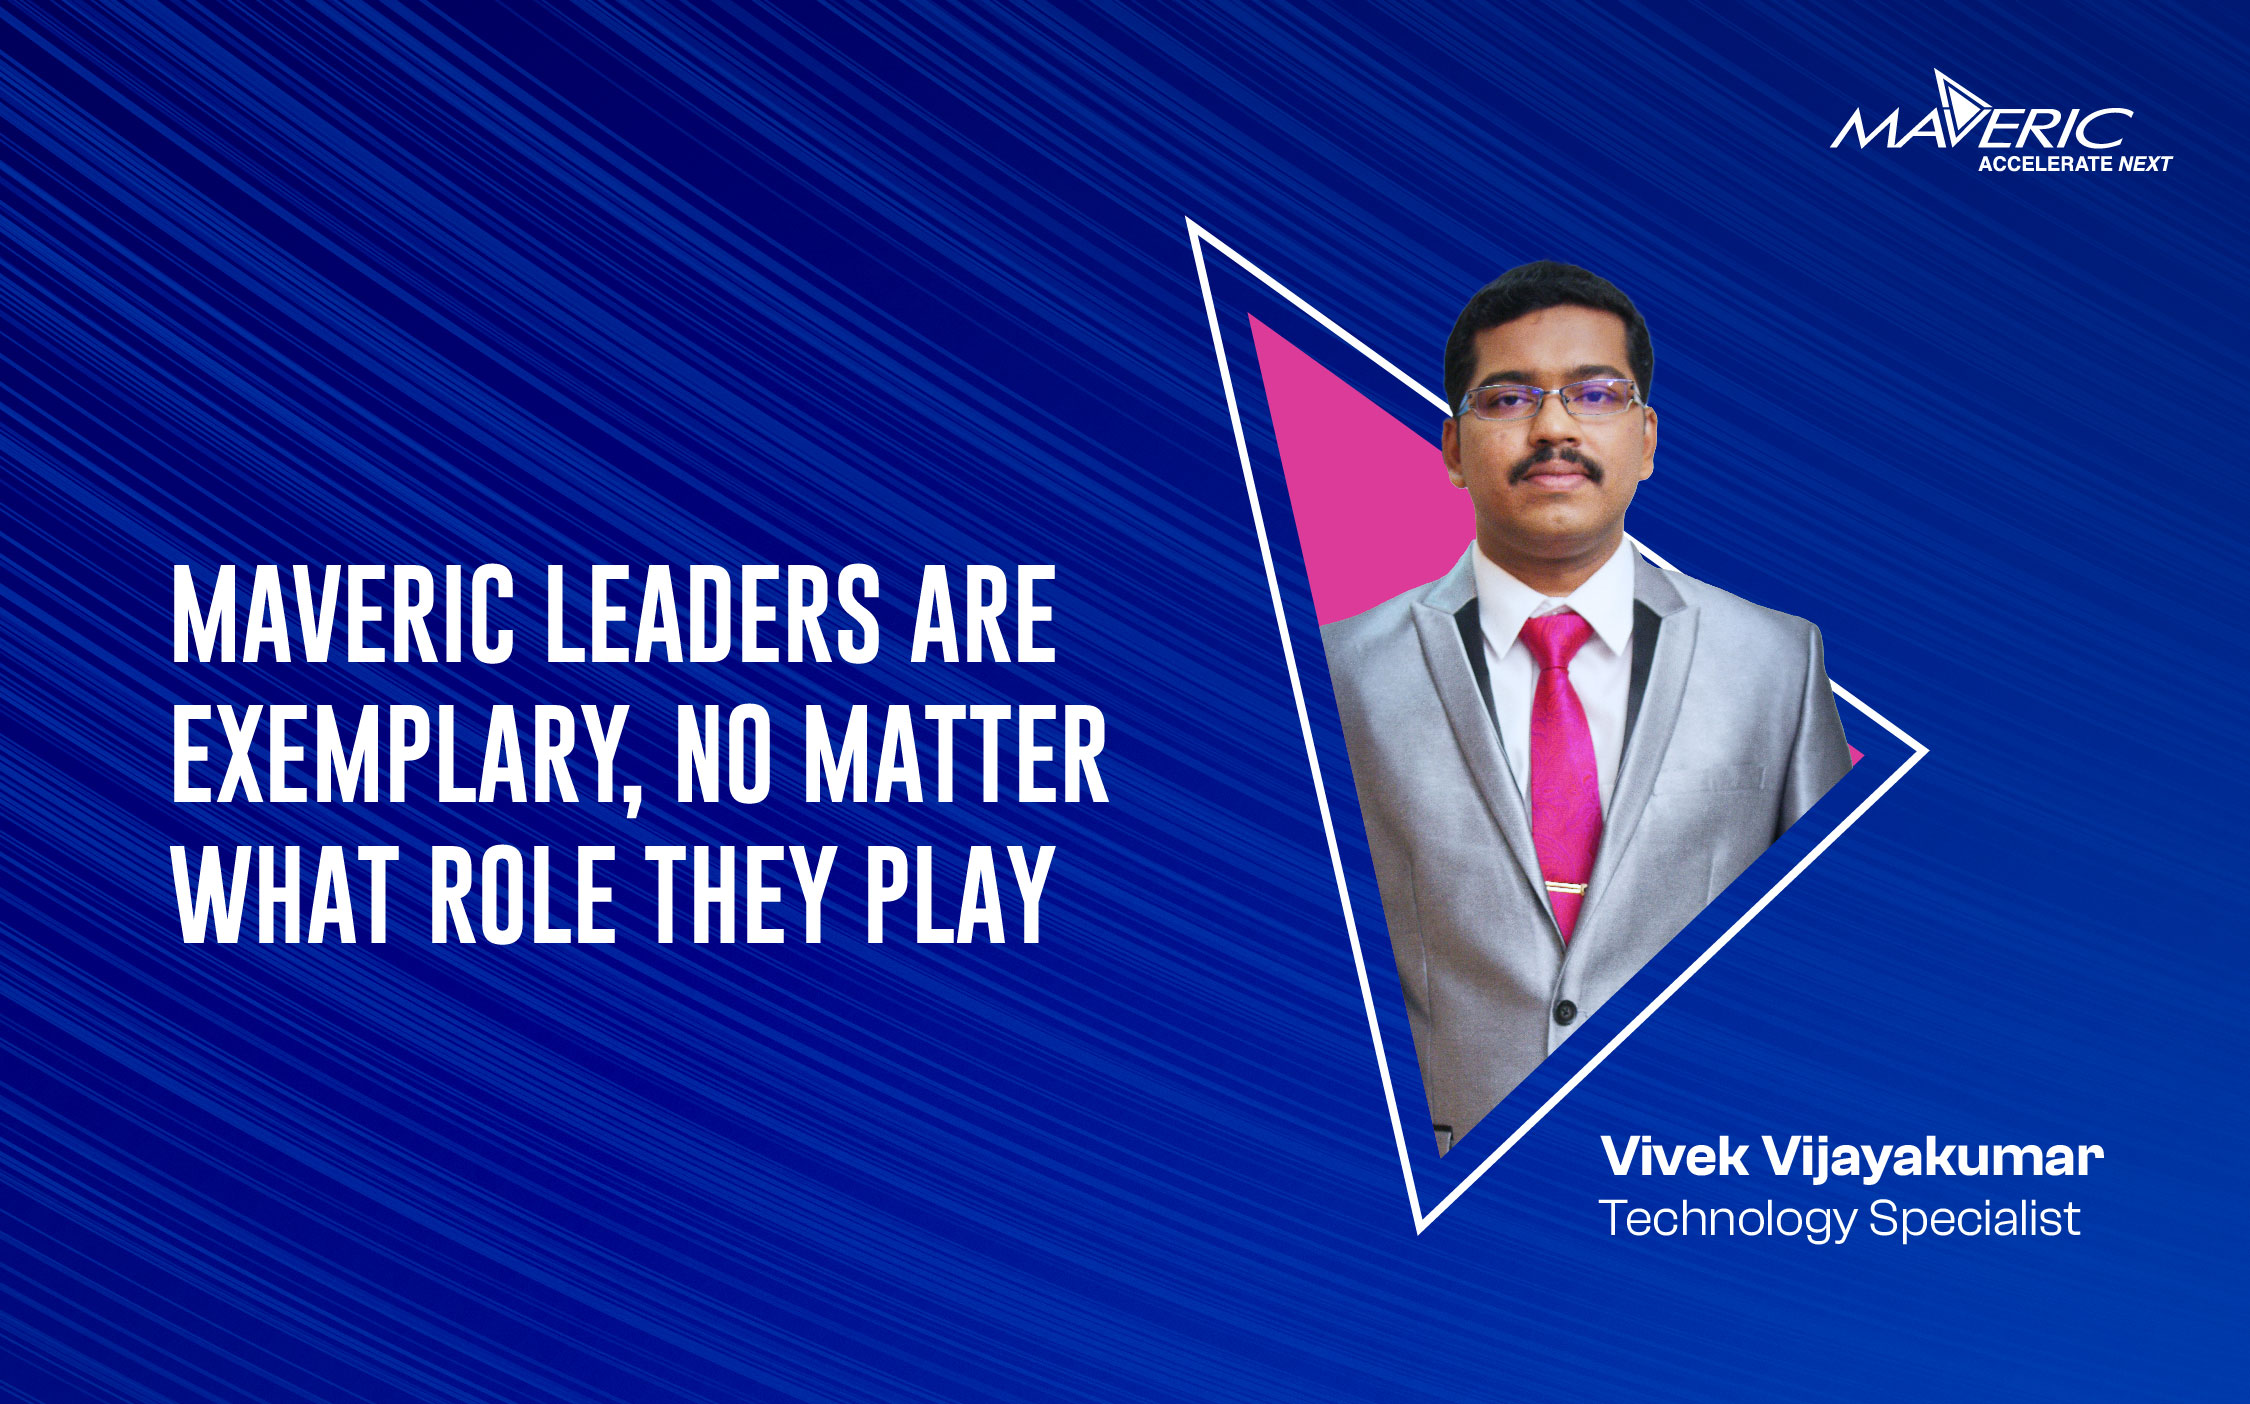 Vivek Vijaykumar – Technology Specialist